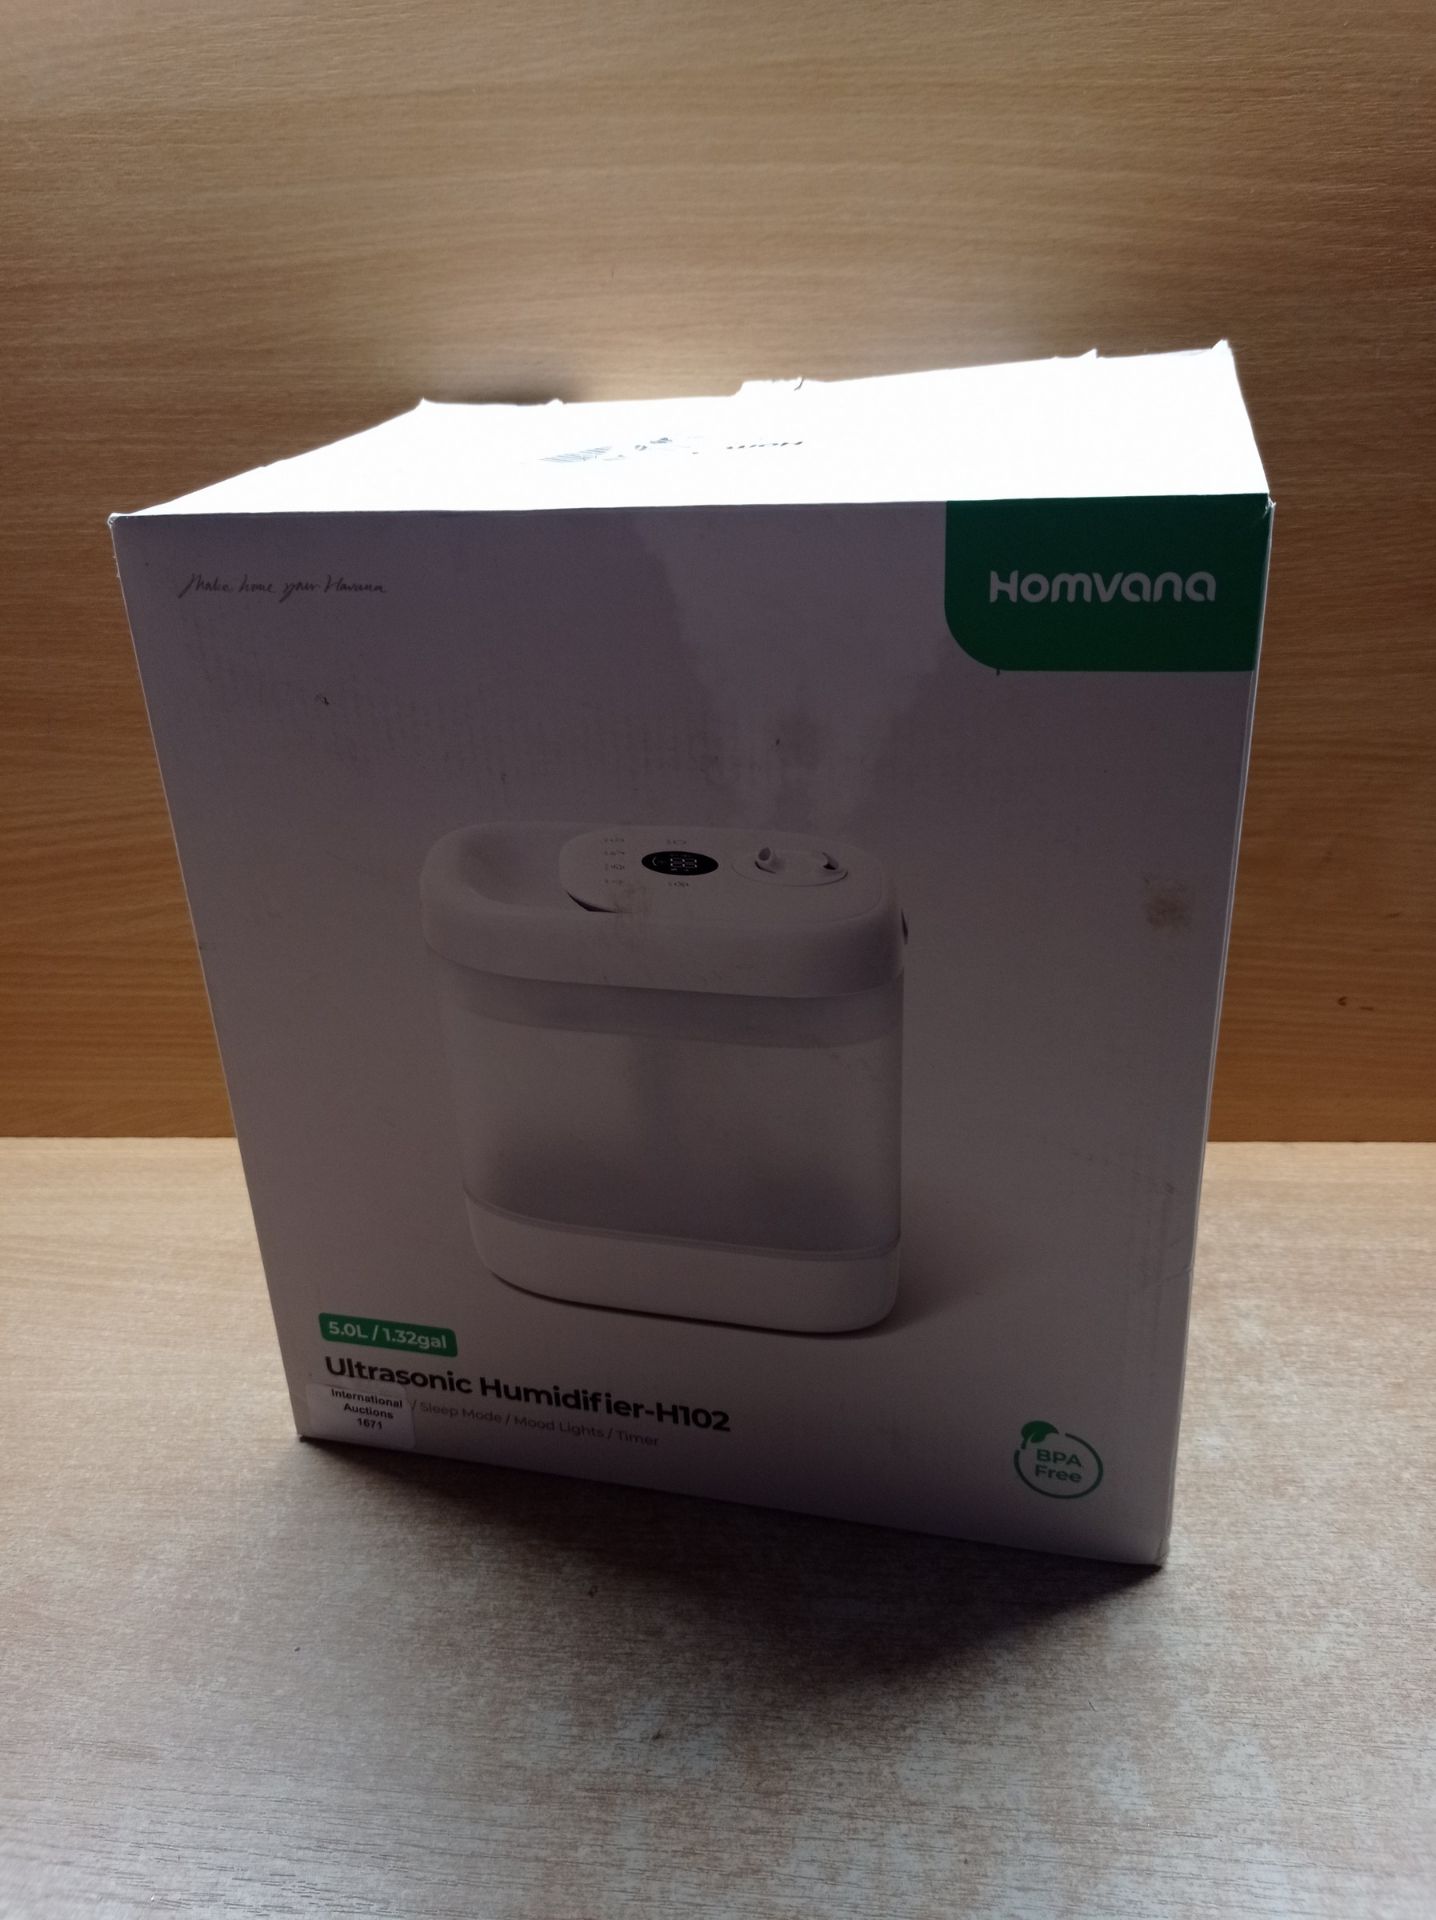 RRP £38.80 Homvana Humidifier for Bedroom - Image 2 of 2